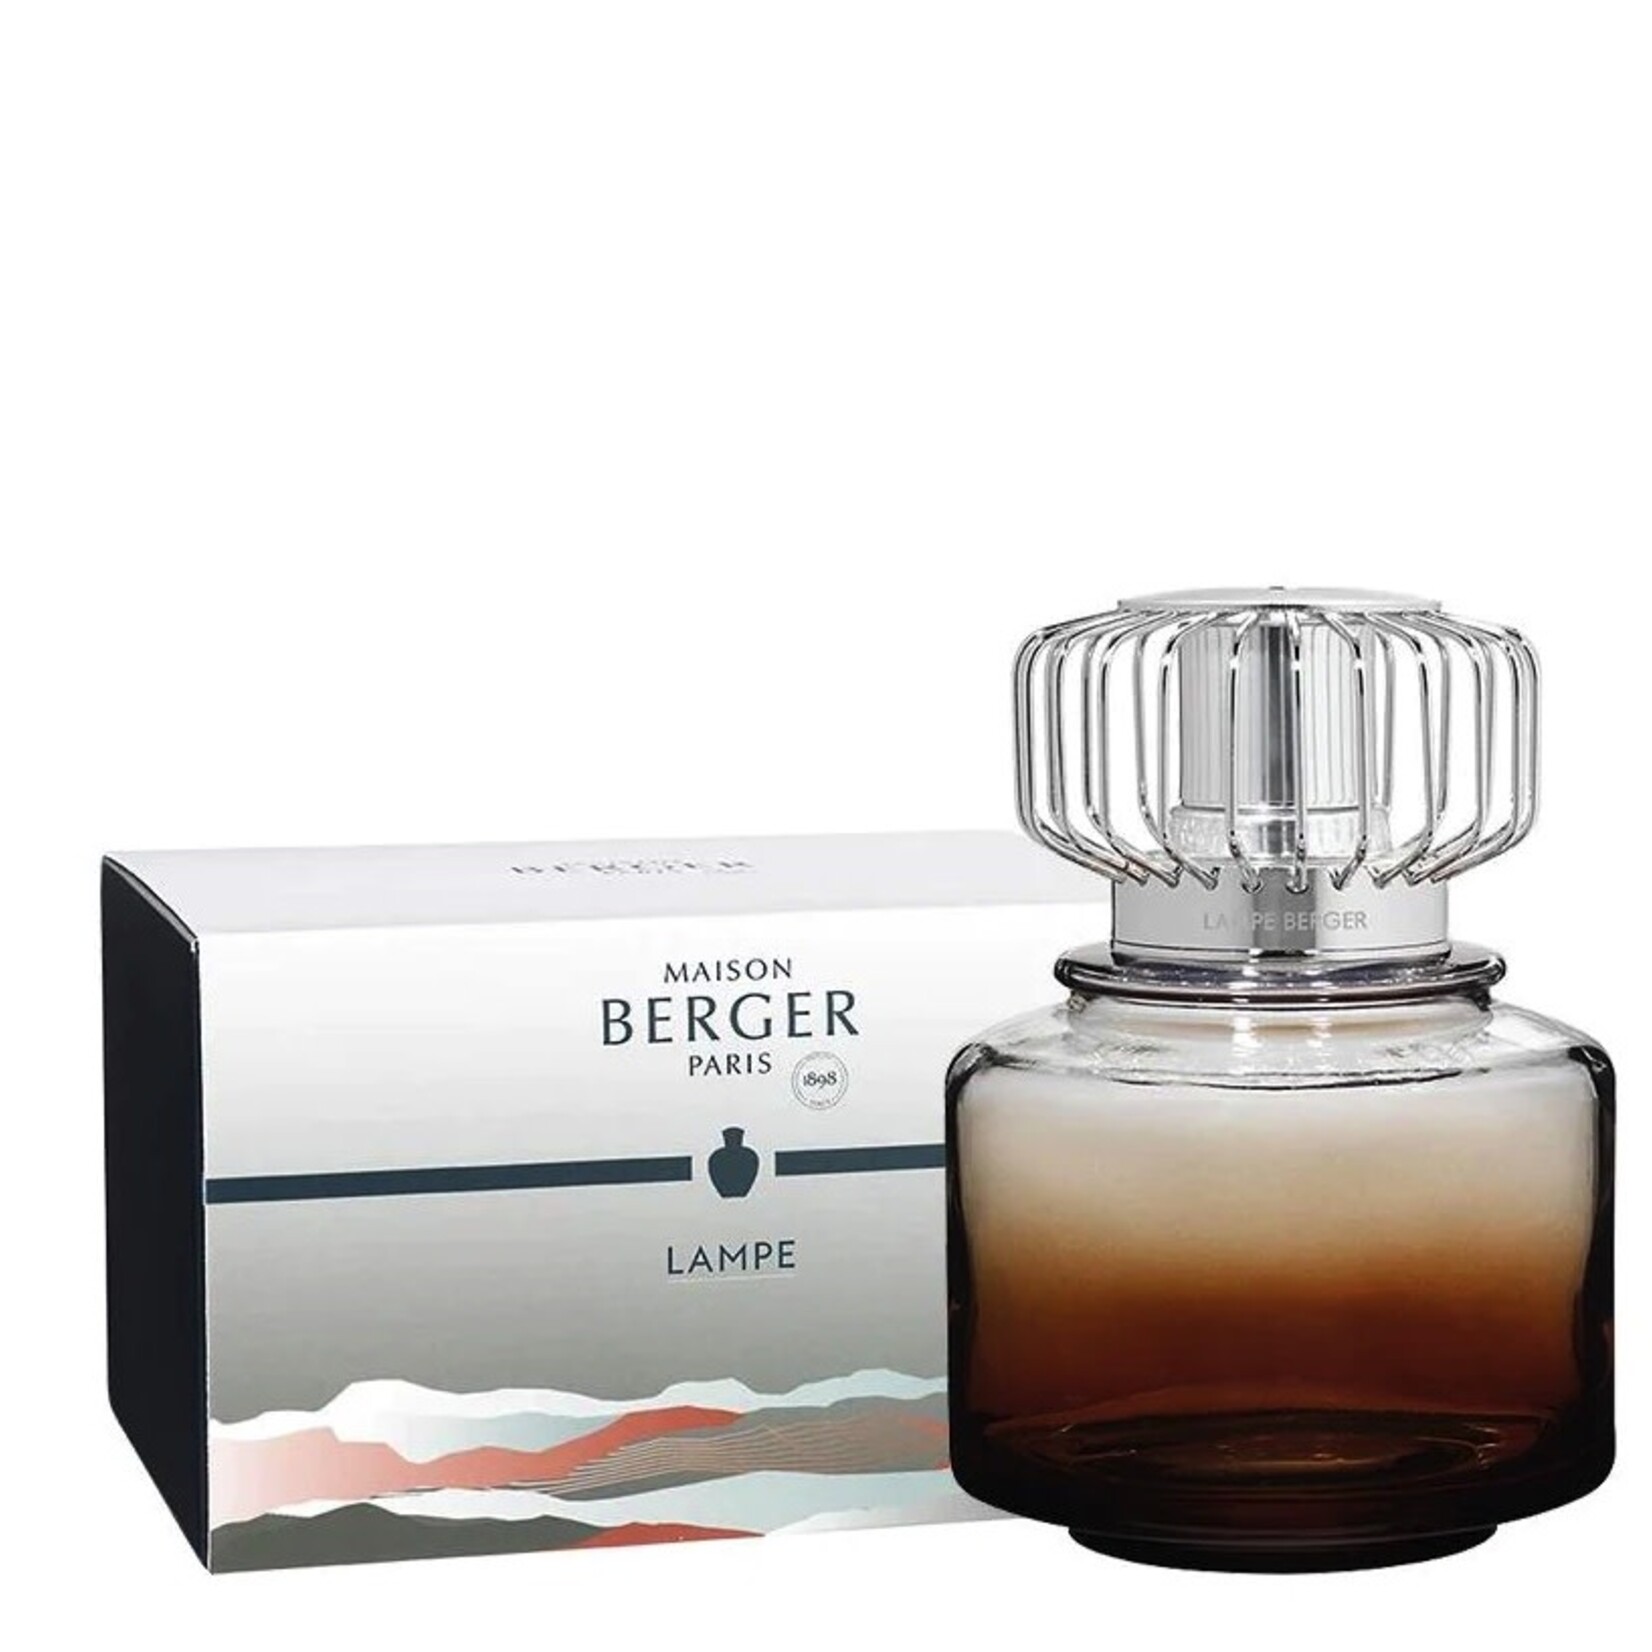 Maison Berger Paris  Land Lamp Berger - Sienna